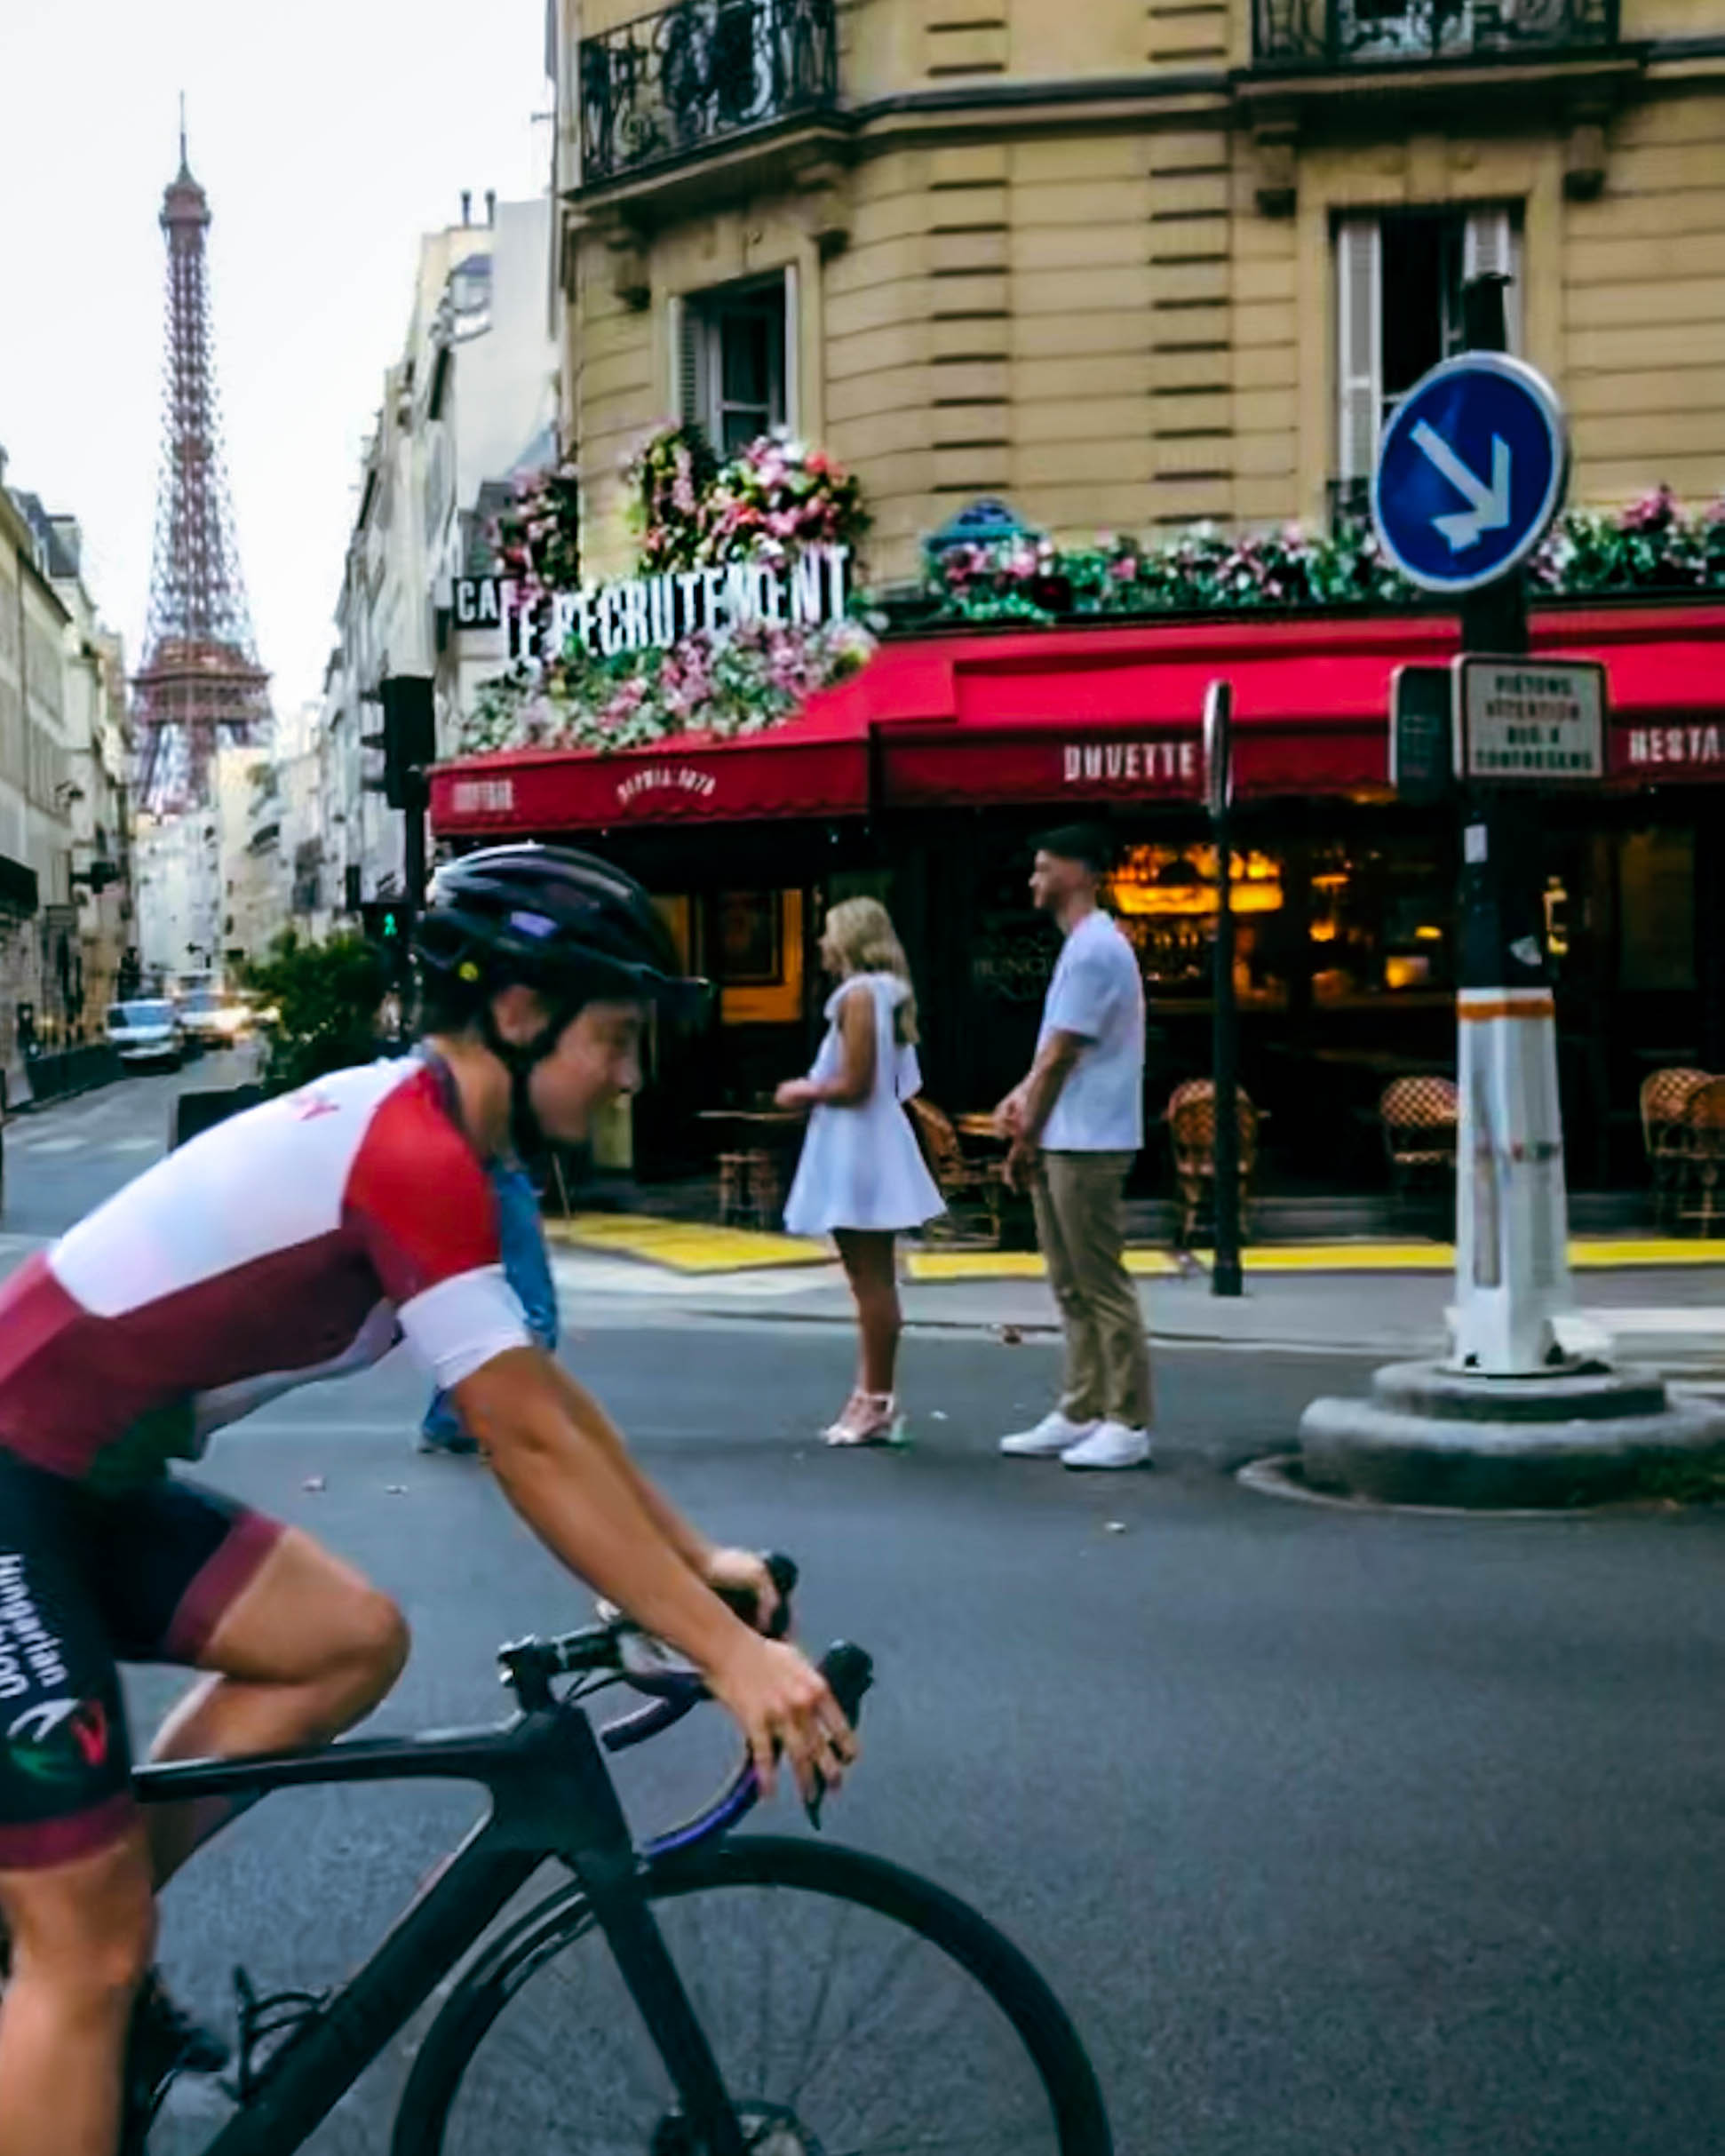 Me biking in the streets of Paris